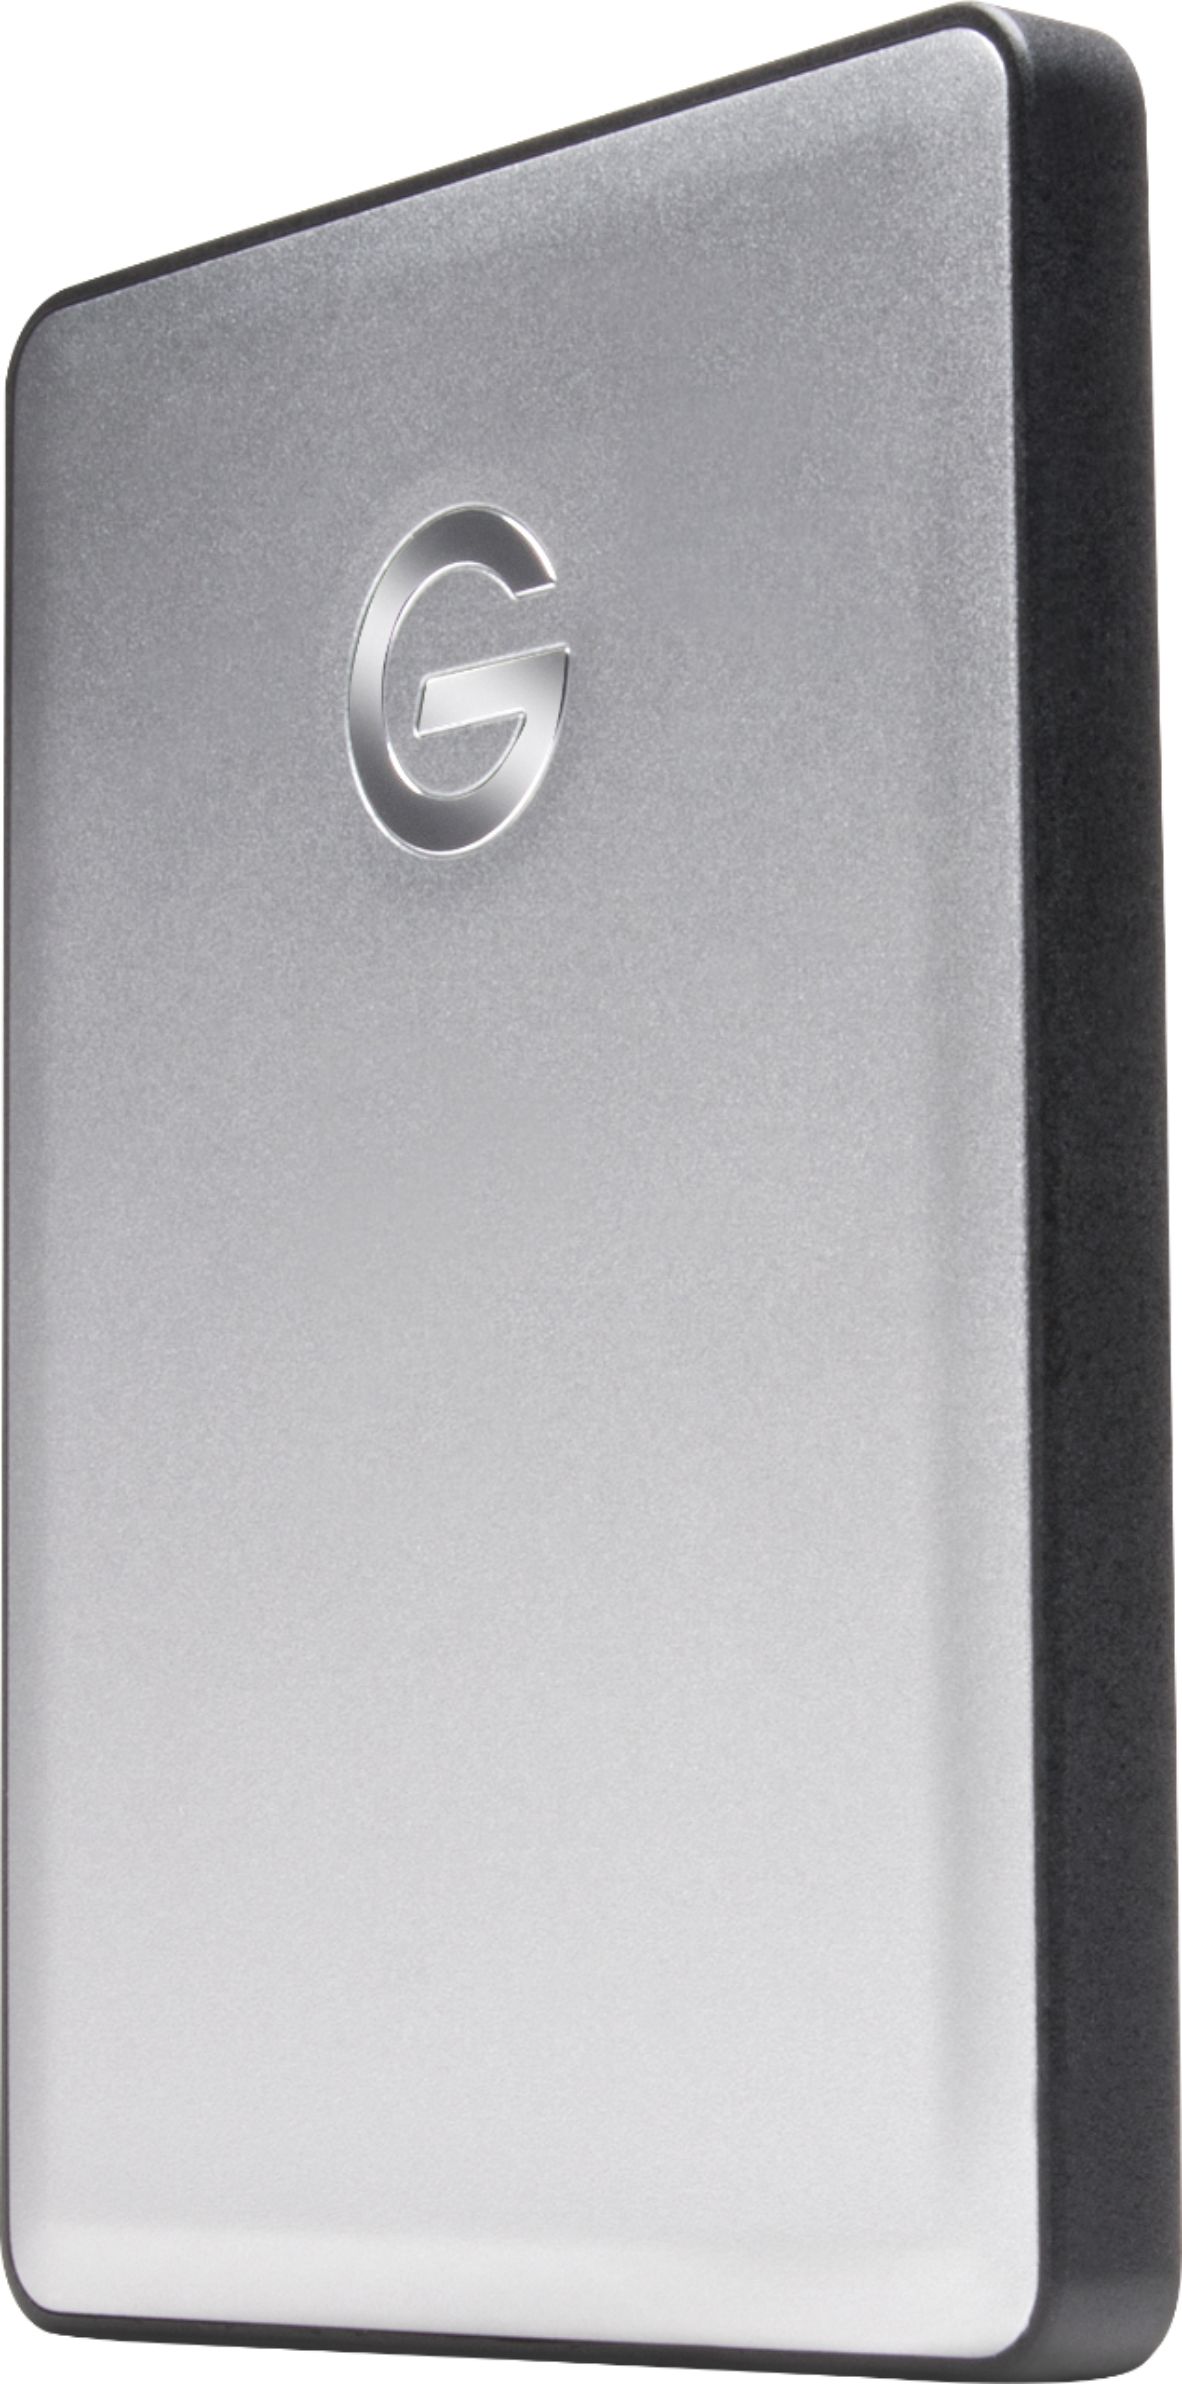 G Technology G Drive Mobile Usb C 2tb External Usb 3 1 Gen 1 Portable Hard Drive Space Gray 0g Best Buy